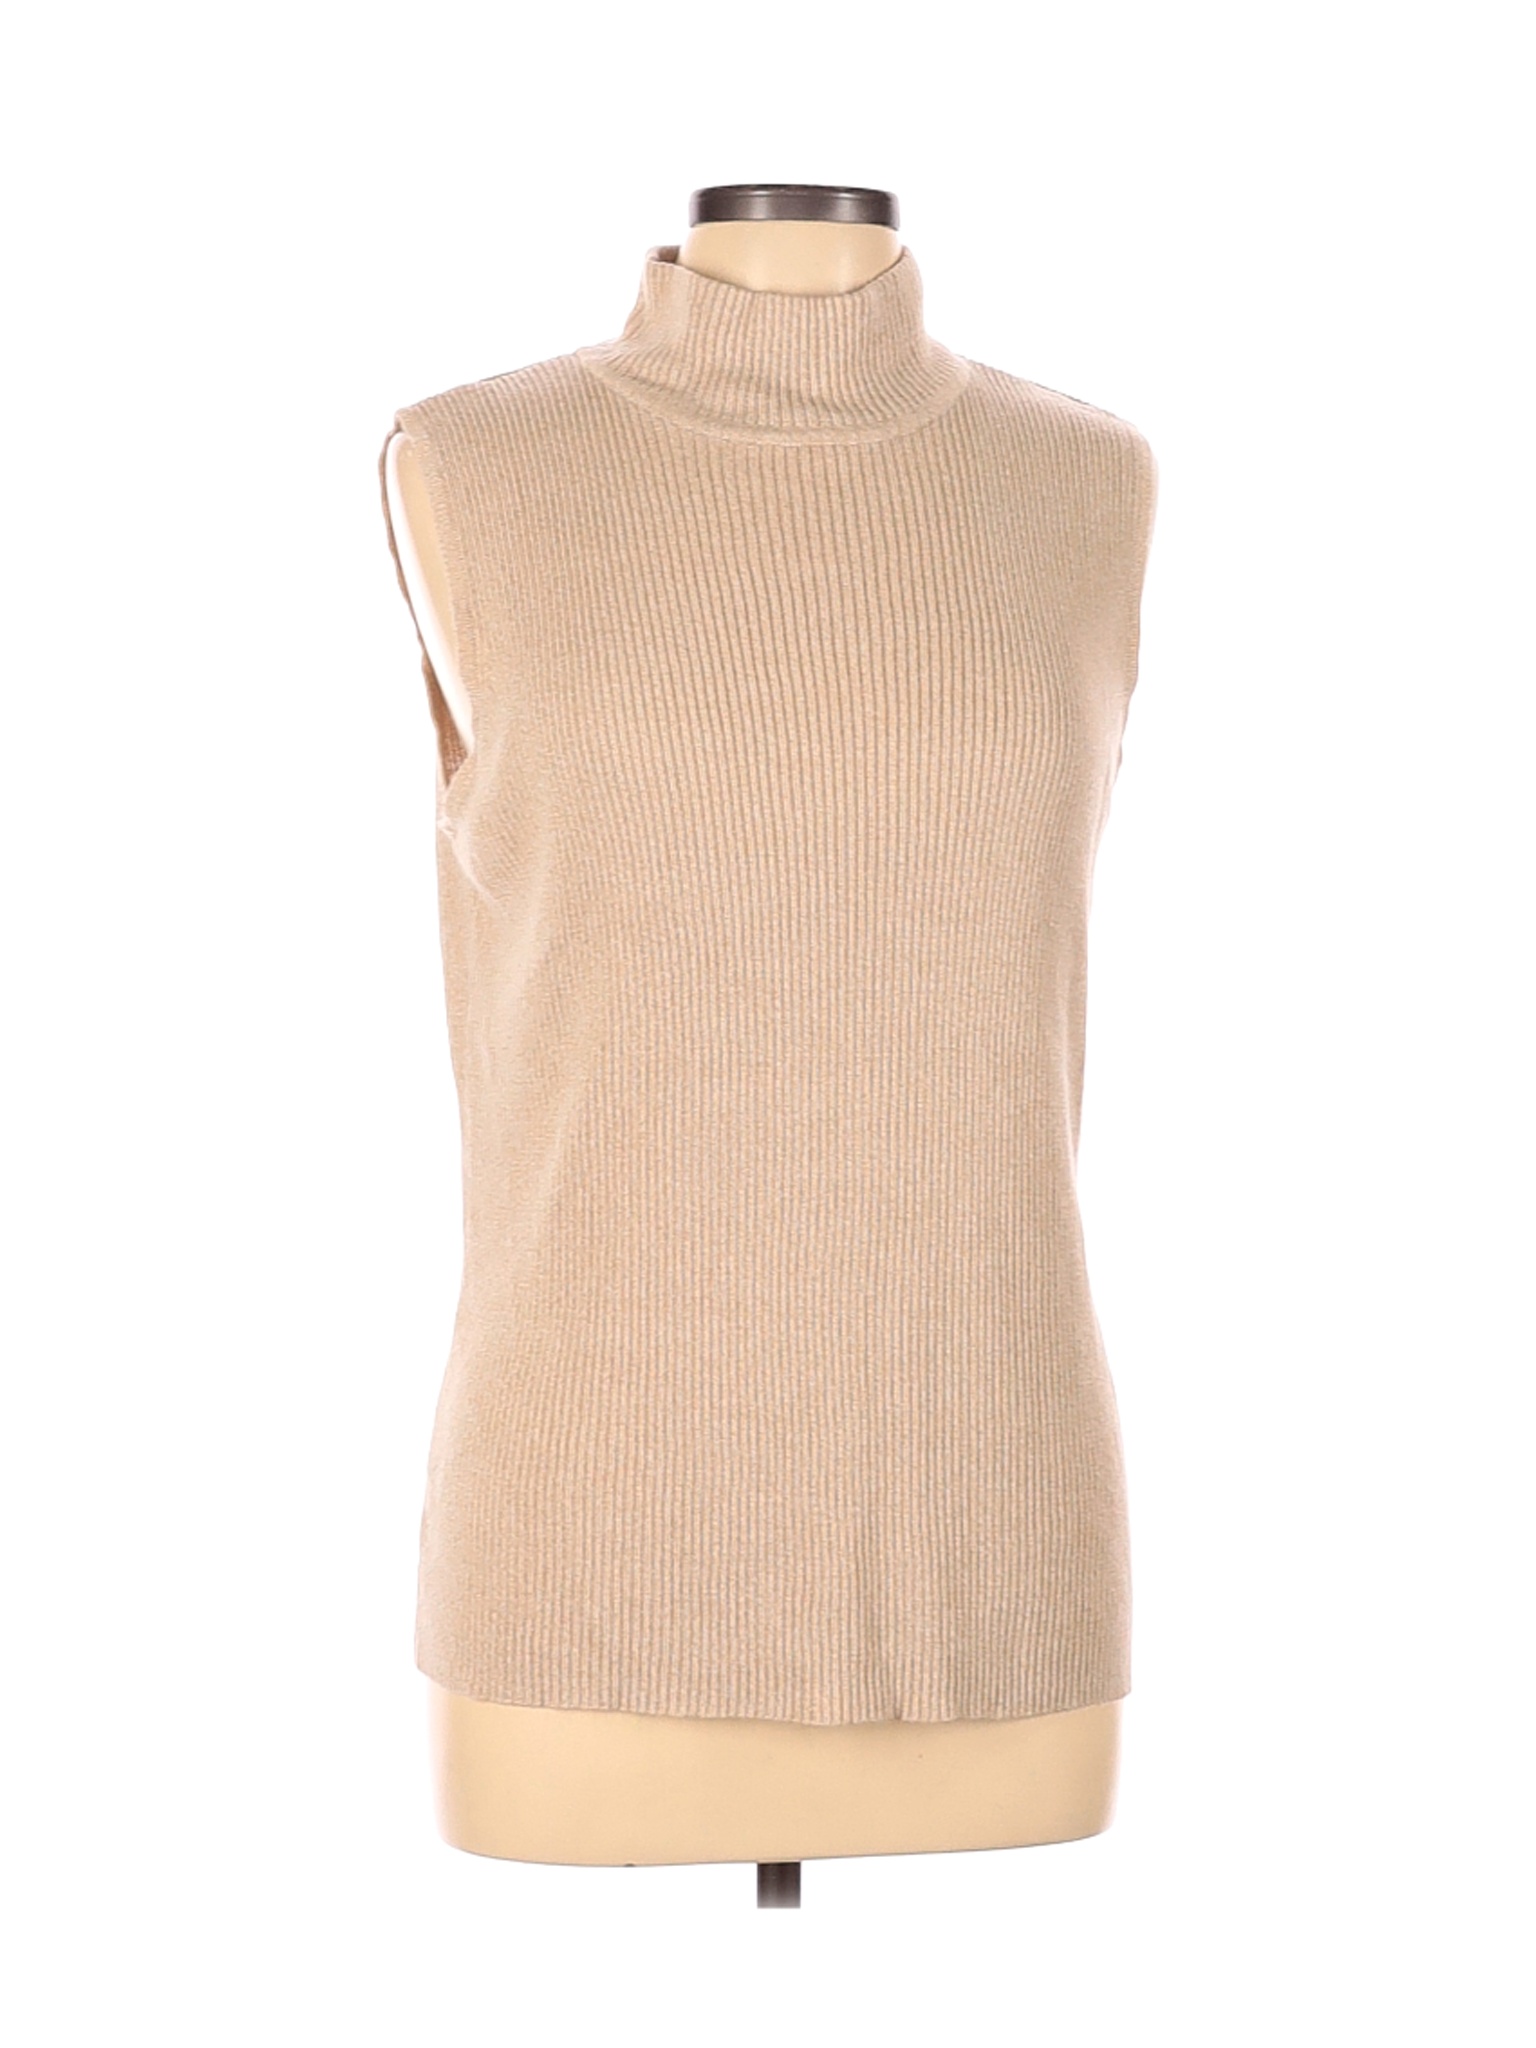 Dana Buchman Women Brown Turtleneck Sweater XL | eBay